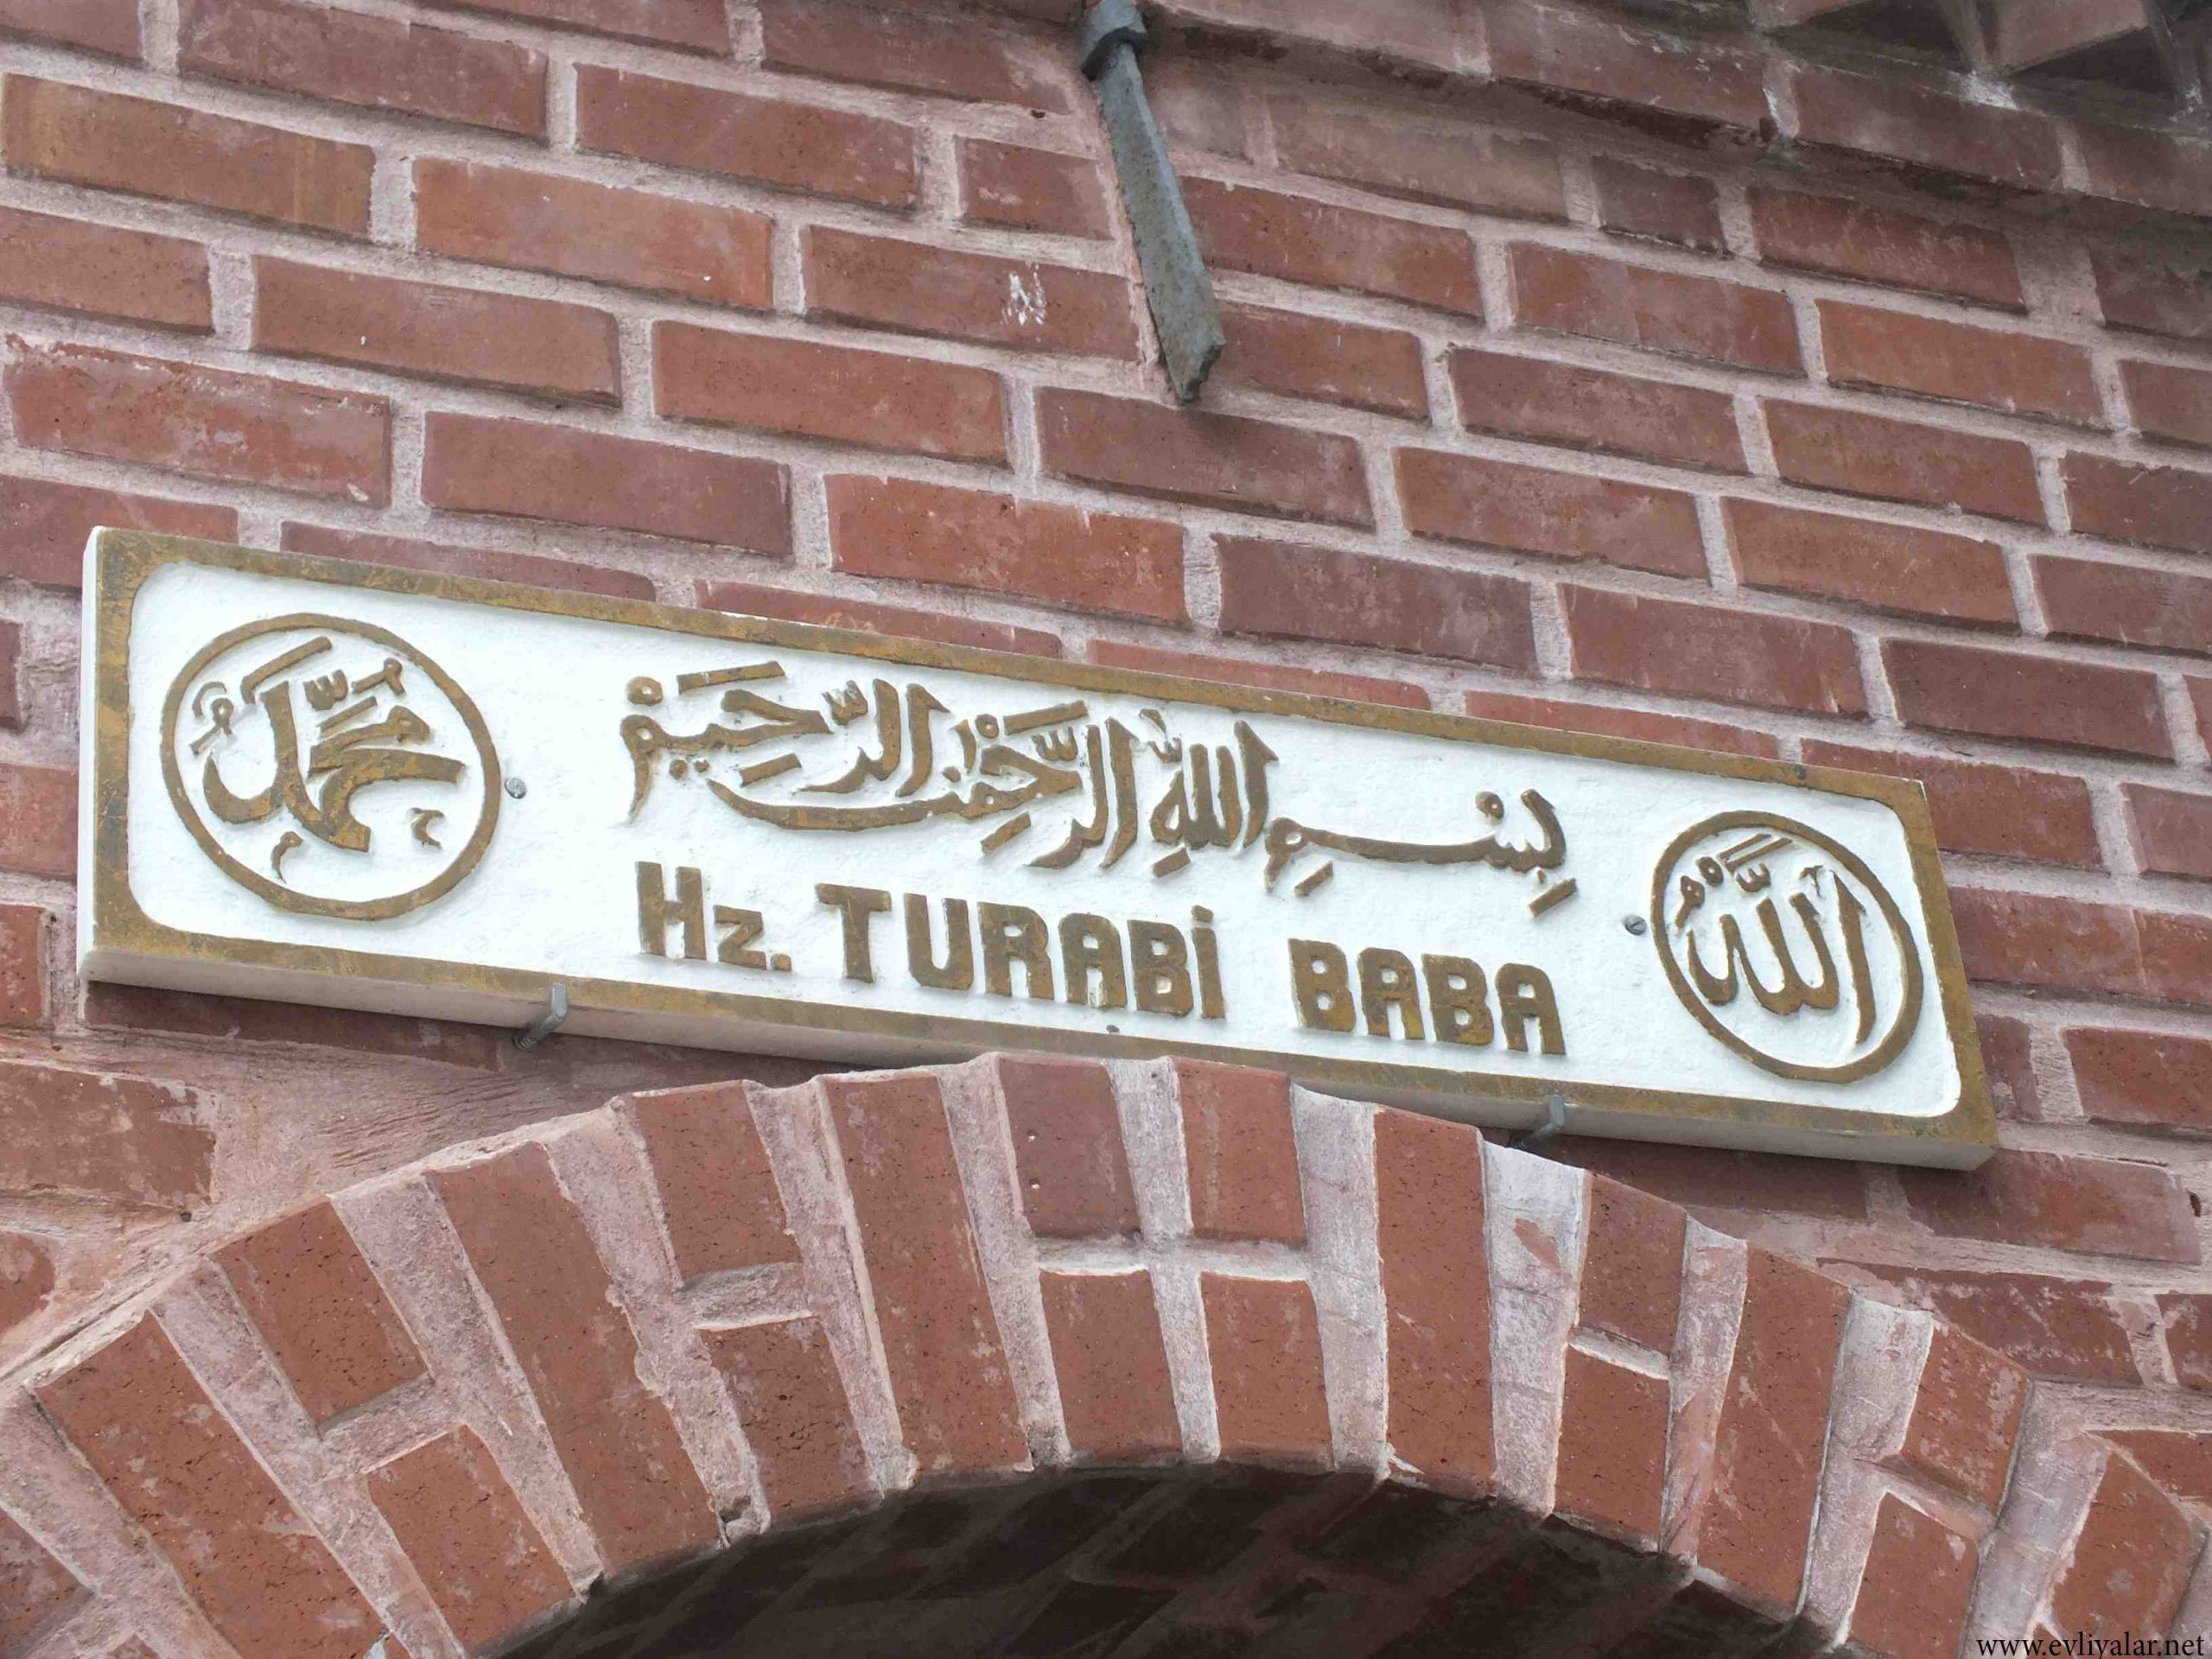 Turabi Baba (k.s.)